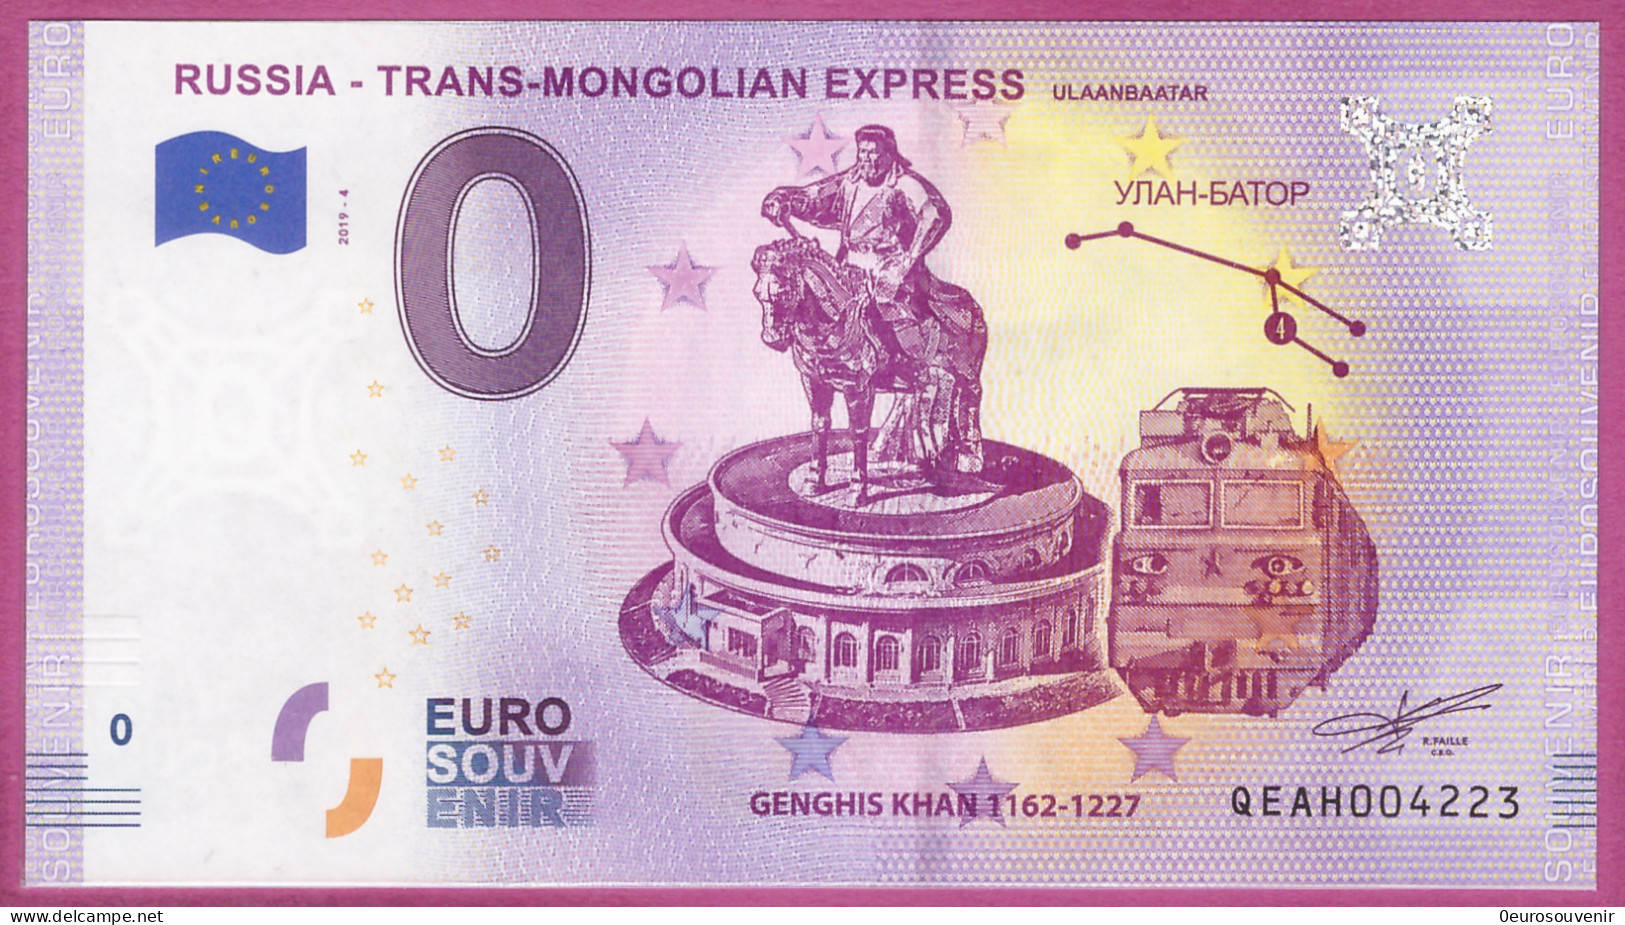 0-Euro QEAH 2019-4 RUSSIA - TRANS-MONGOLIAN EXPRESS ULAANBAATAR - Essais Privés / Non-officiels